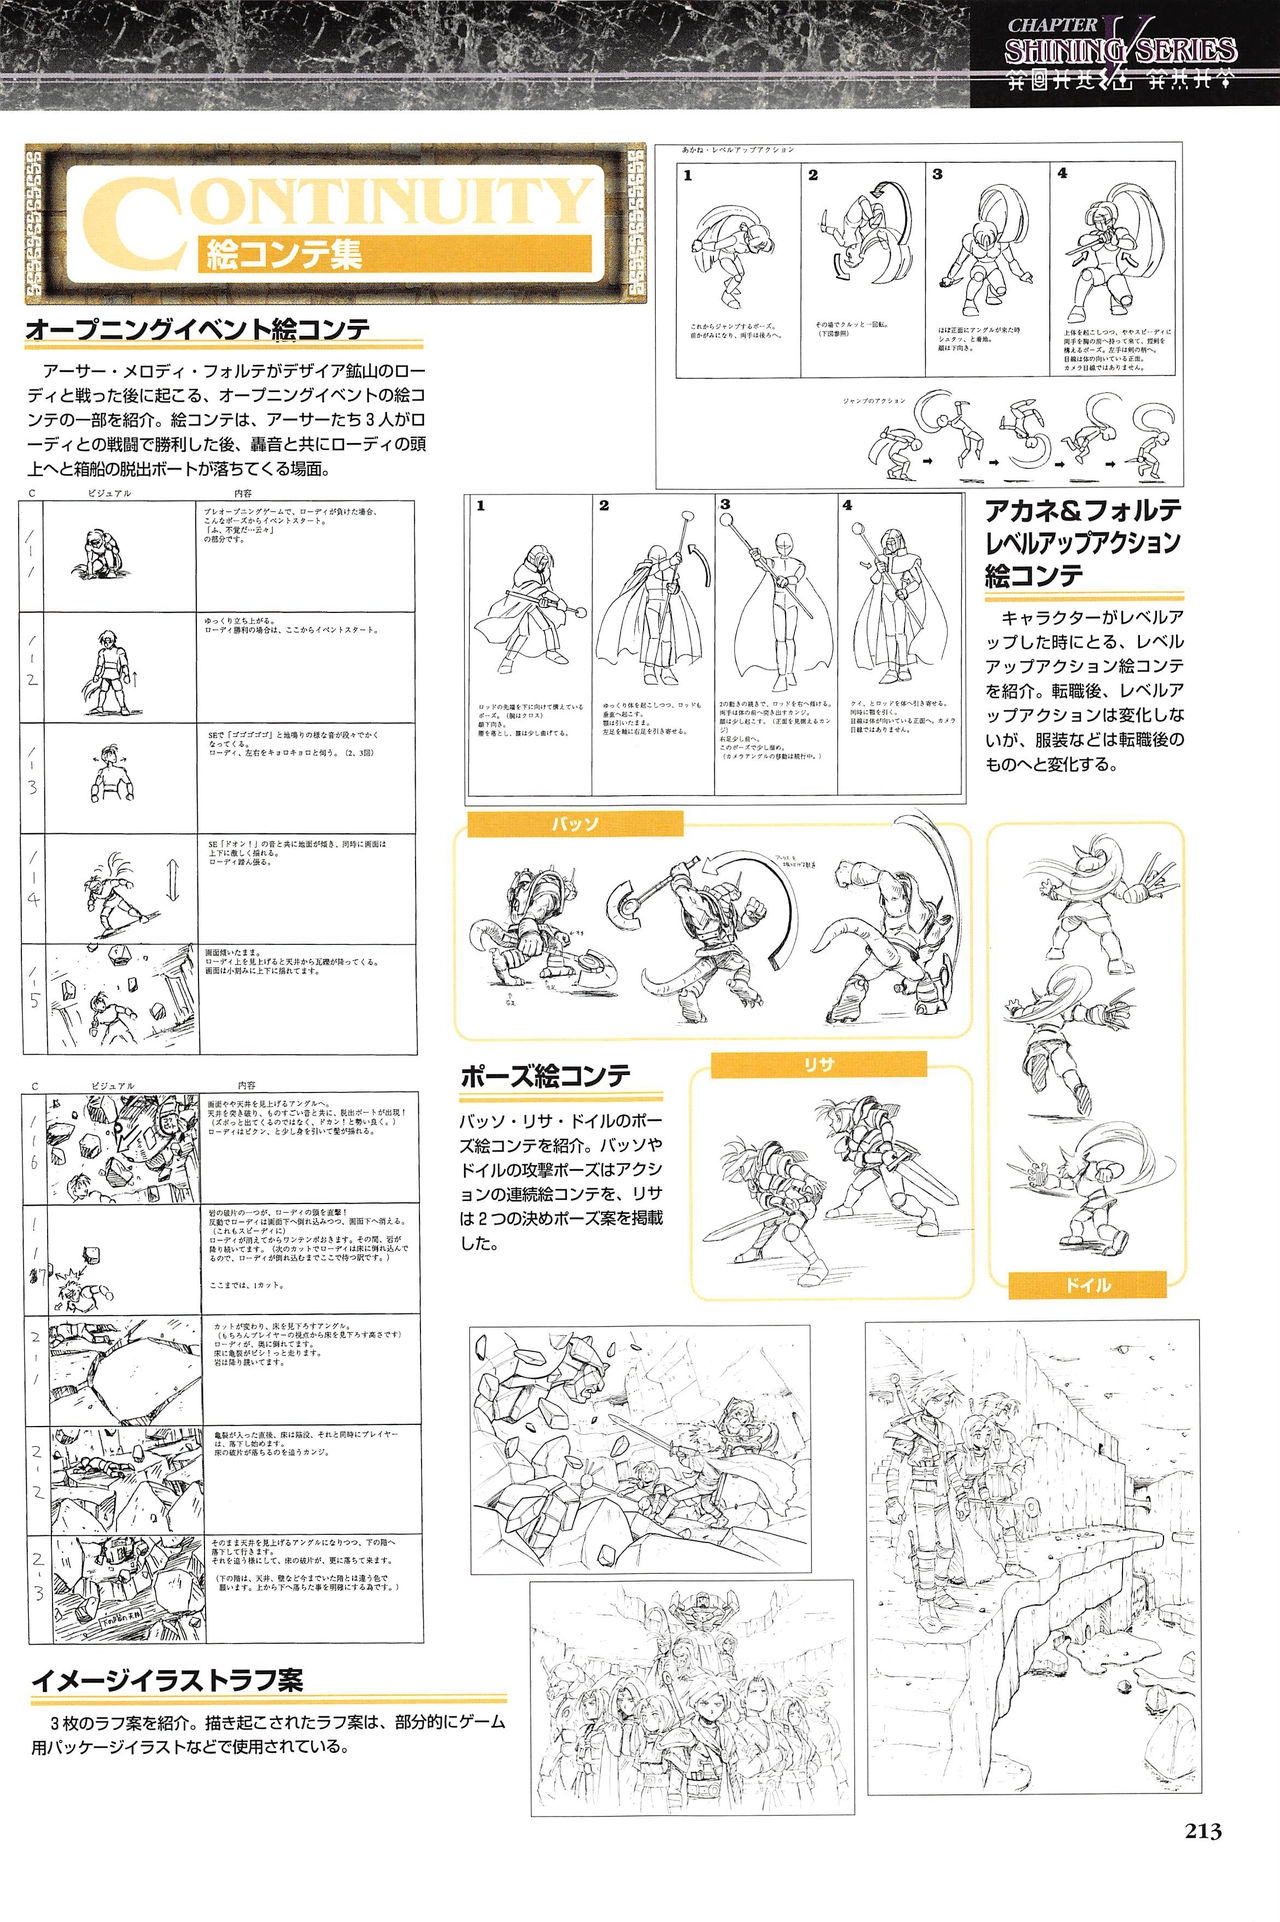 [Kajiyama  Hiroshi] Shining Force III Official Setting Collection Artbook 218